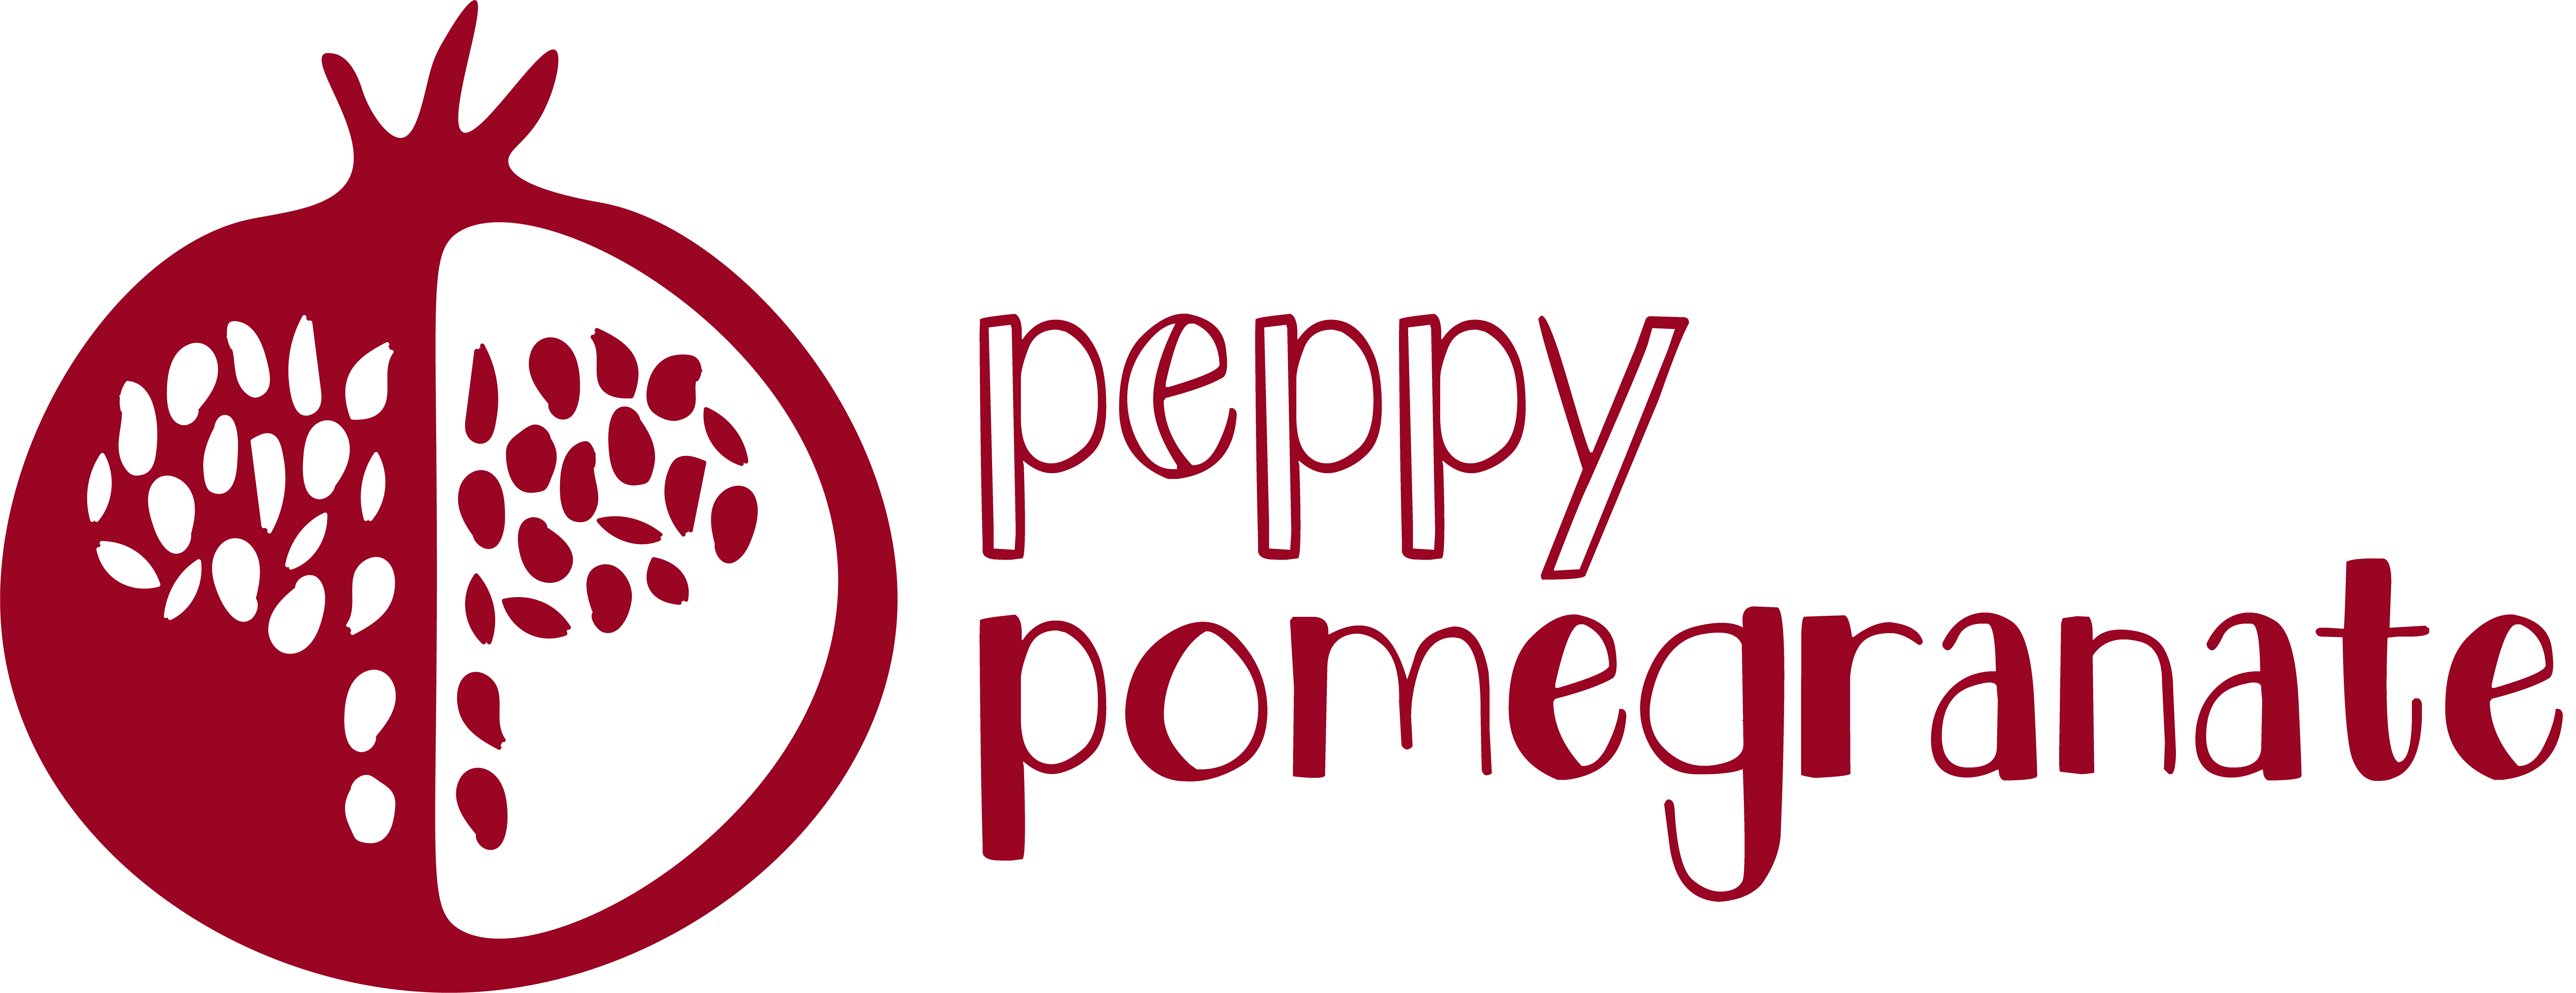 Peppy Pomegranate